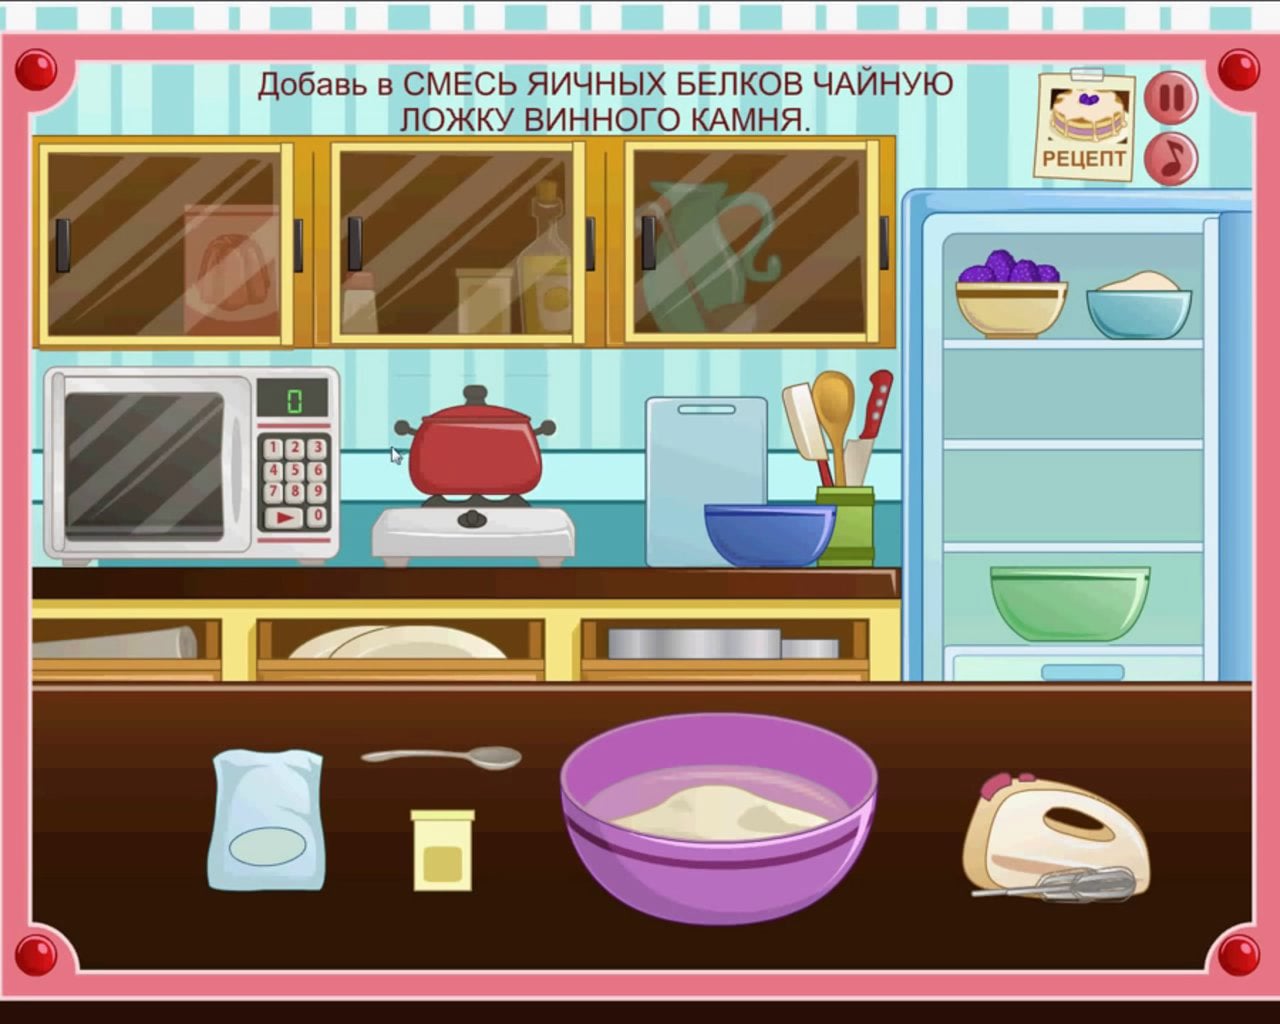 Rachel's Kitchen Grandprix: Cake Game - Play Rachel's Kitchen Grandprix:  Cake Online for Free at YaksGames